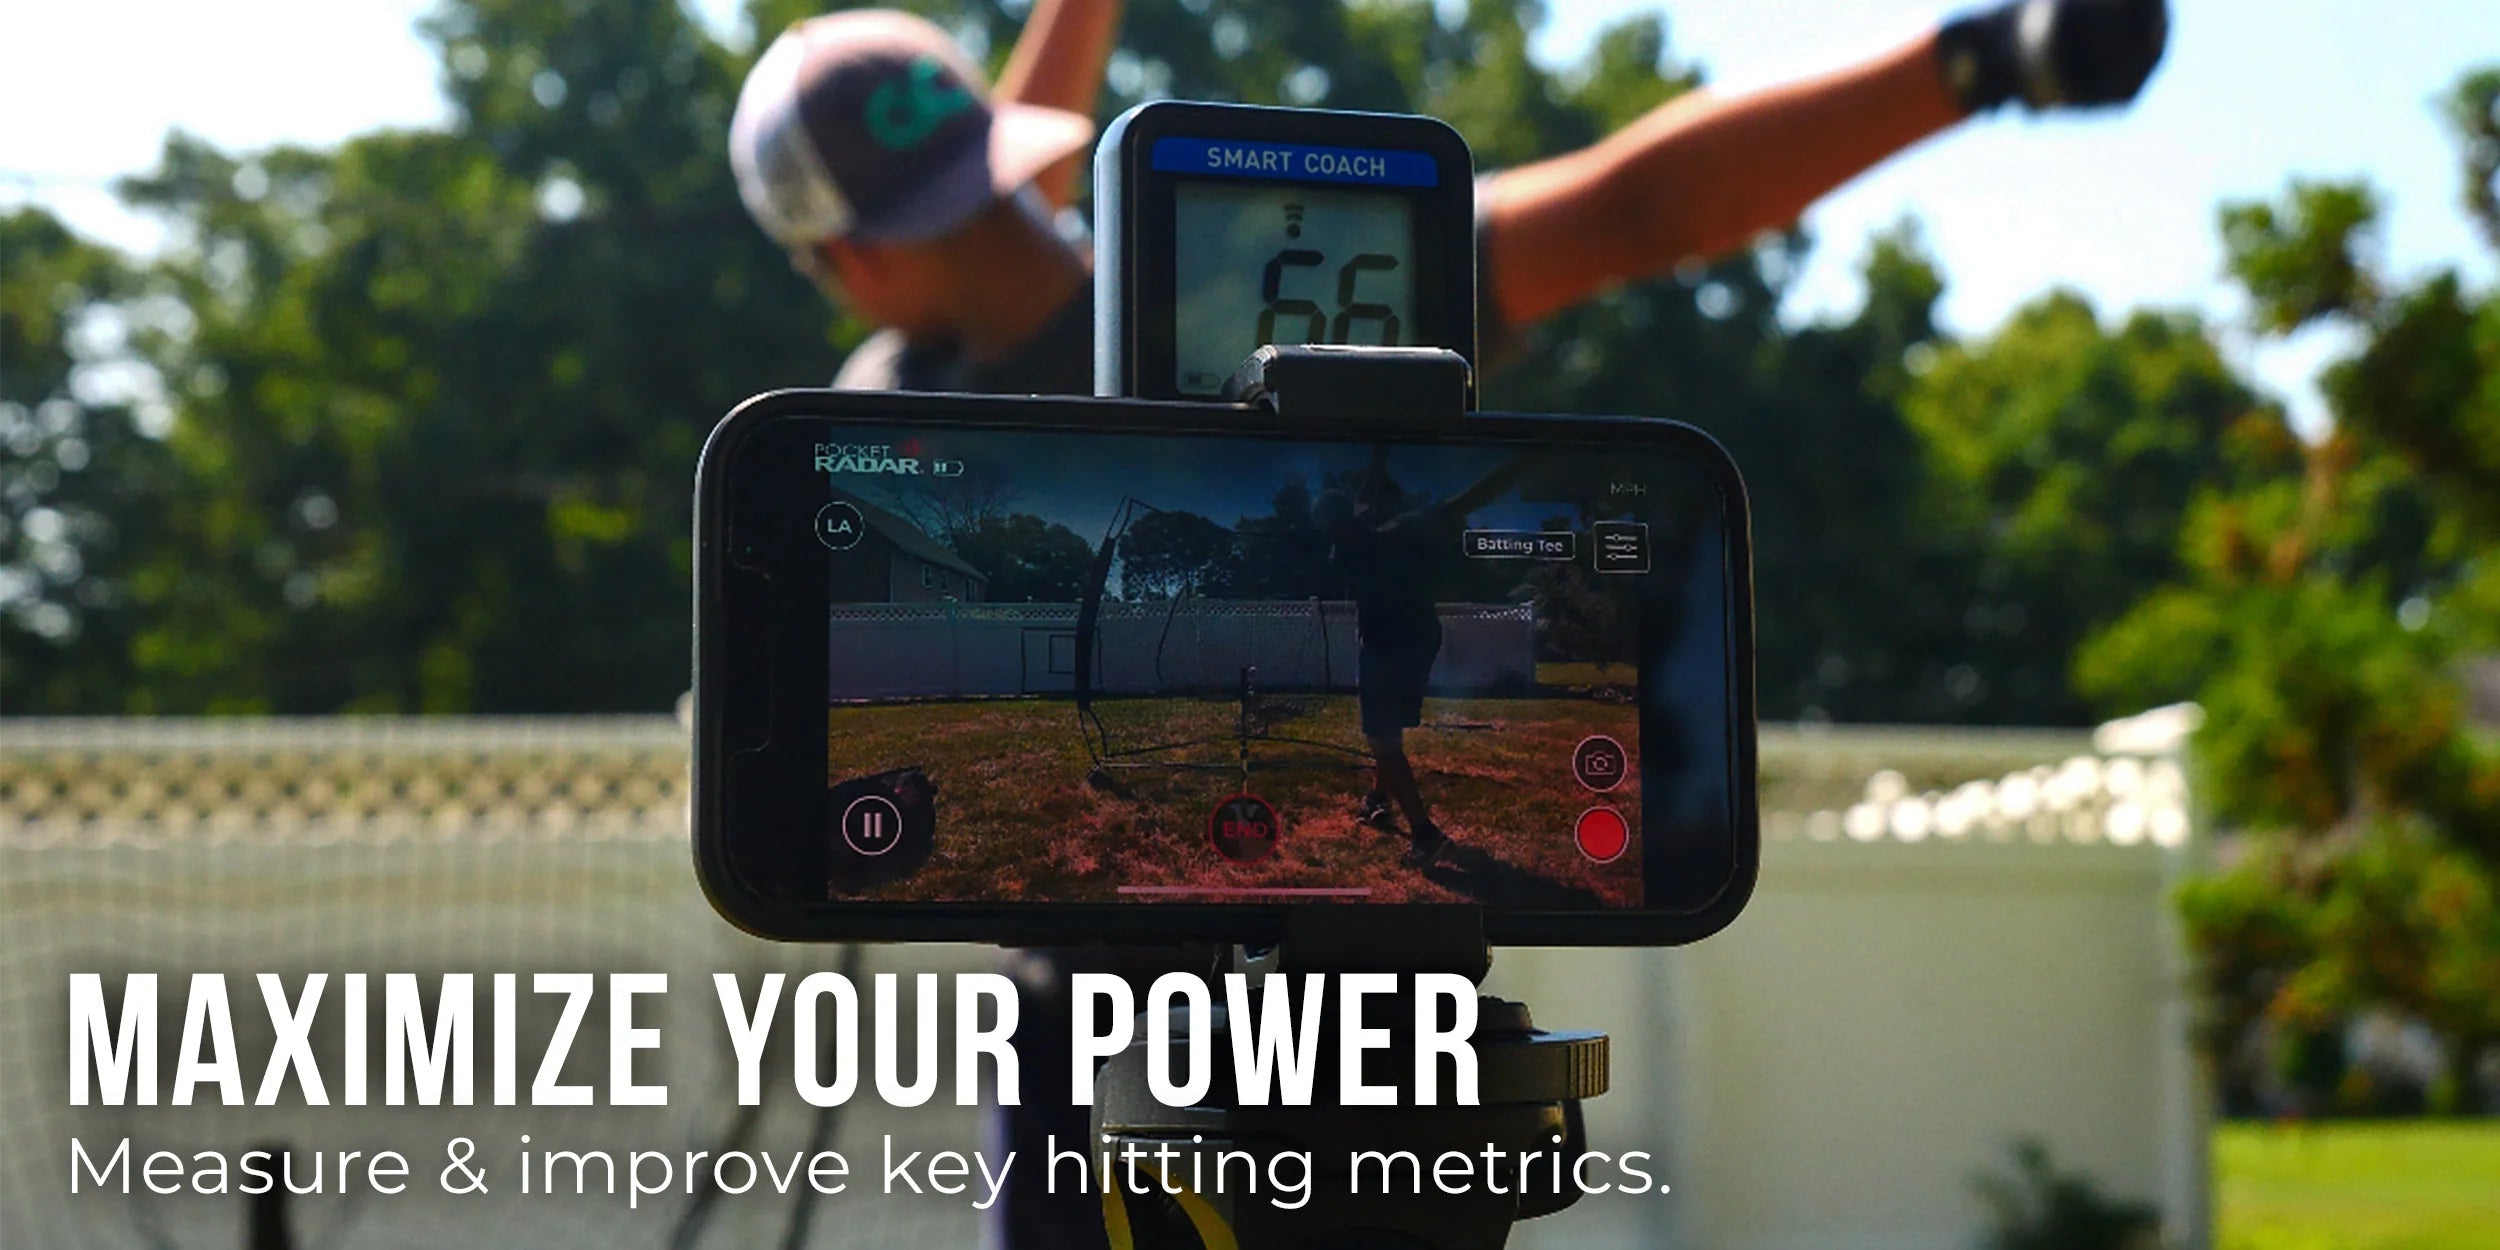 Smart Coach Baseball Radar with App System - Pitch Machine Pros